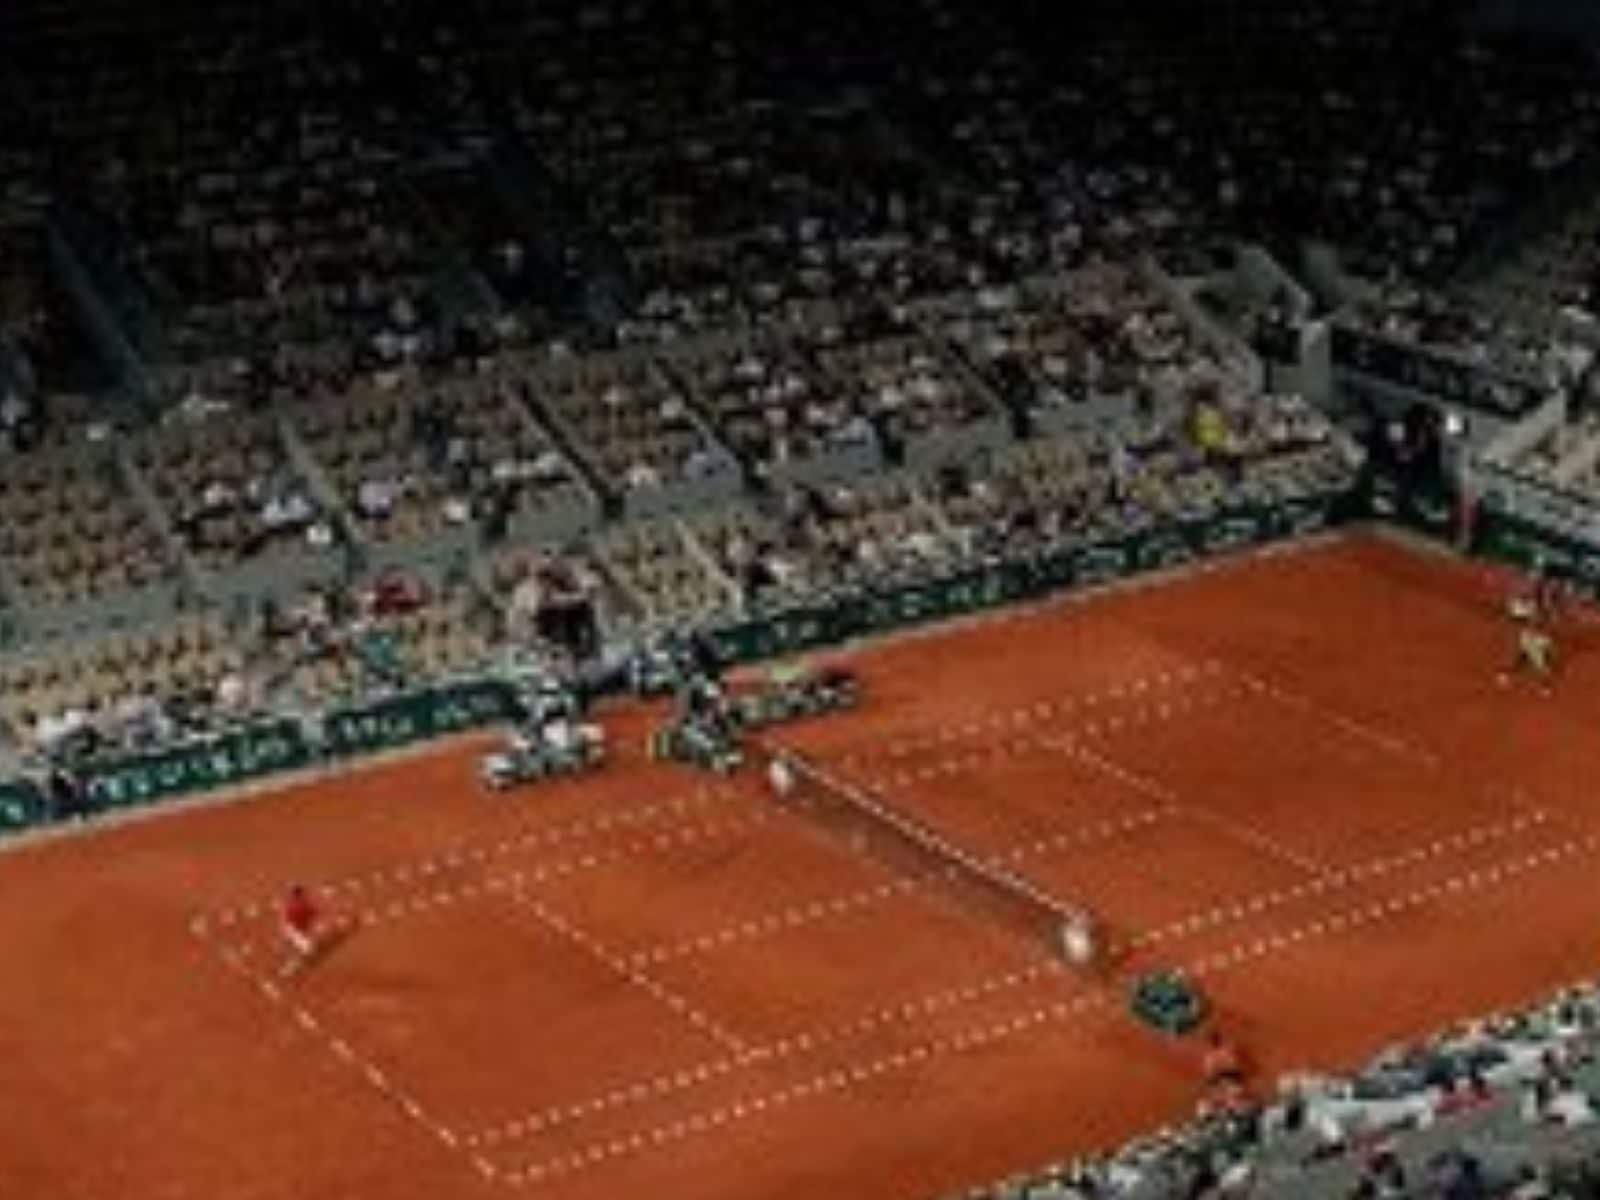 Slams to trial 10-point tiebreak in final set starting with Roland Garros